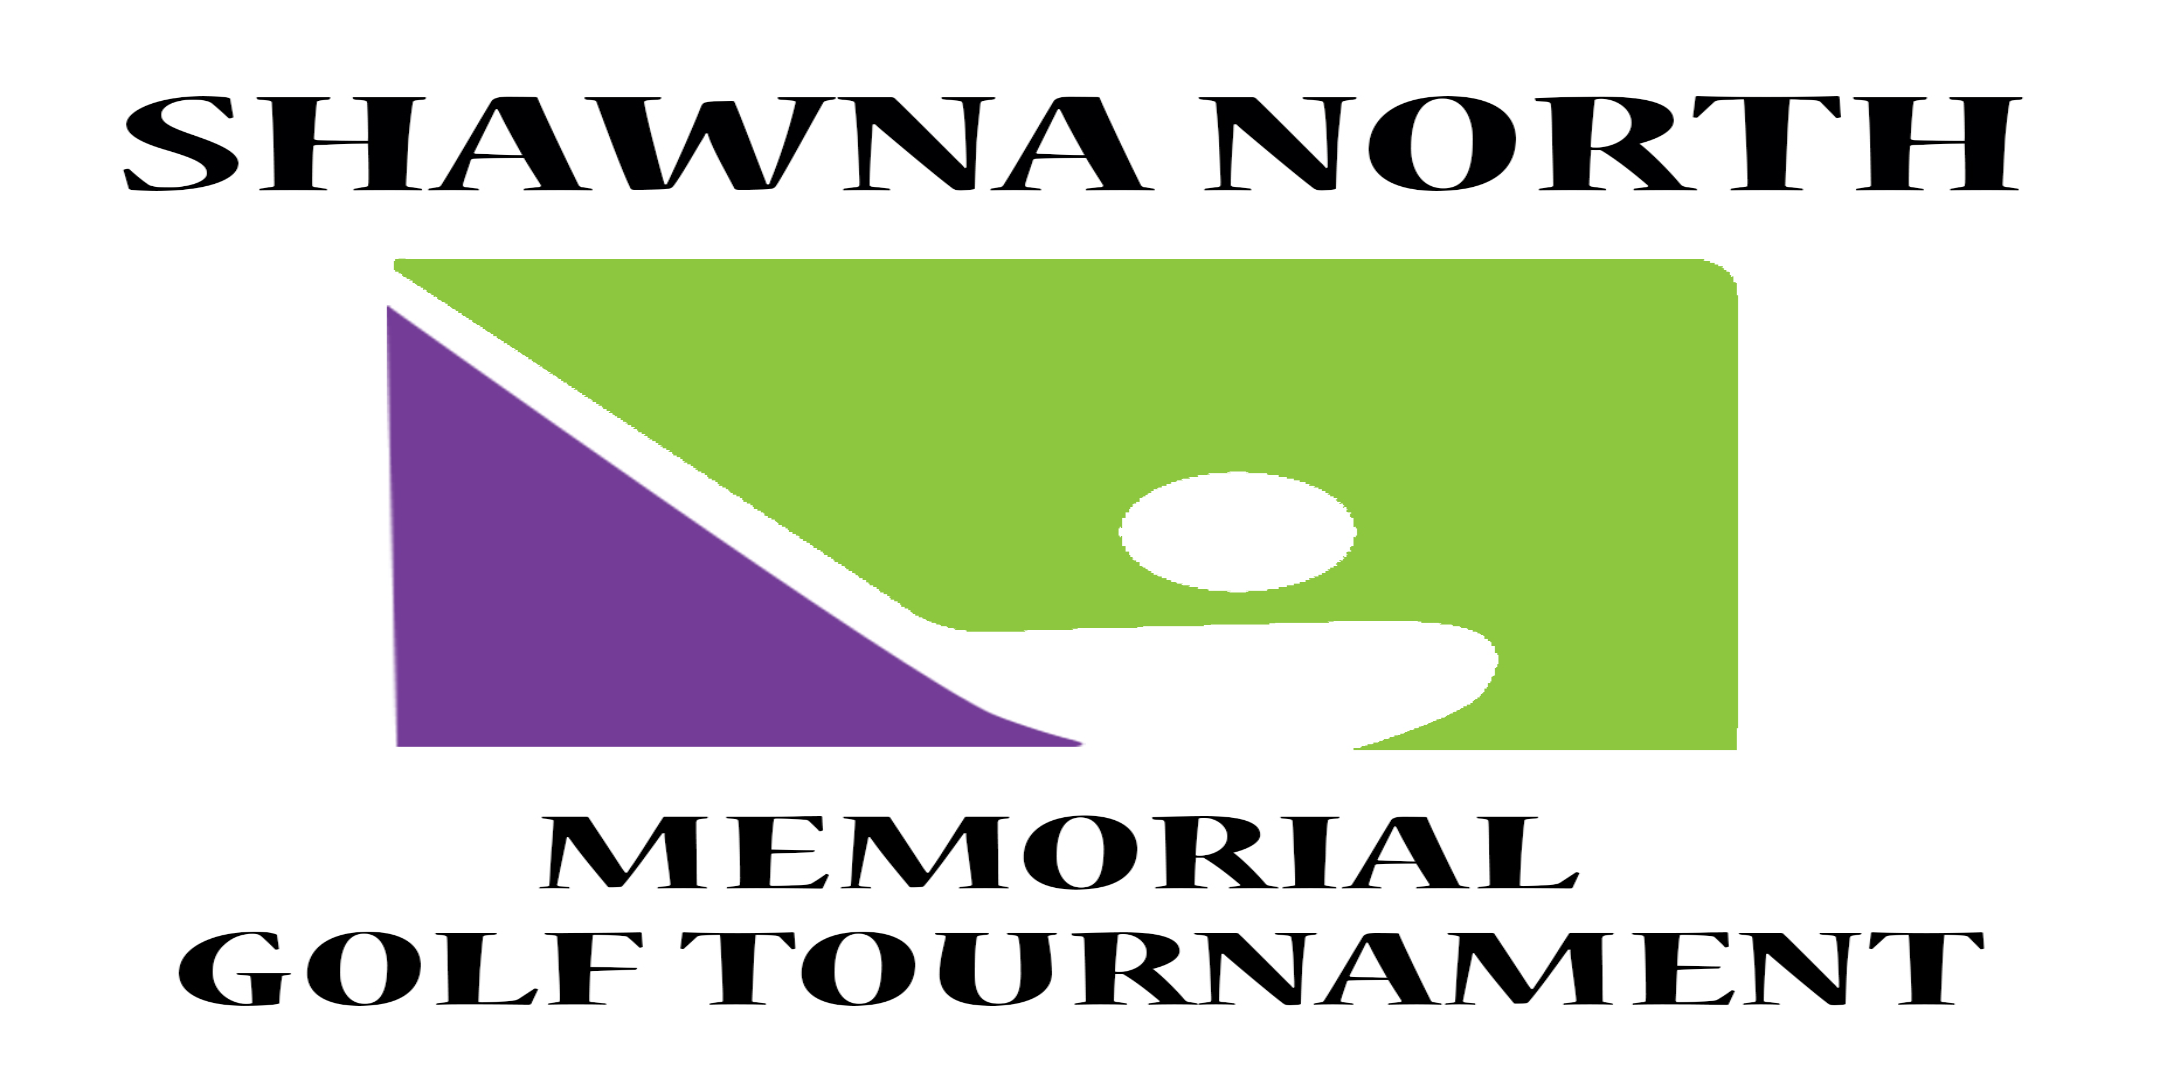 Shawna North Memorial Golf Tournament